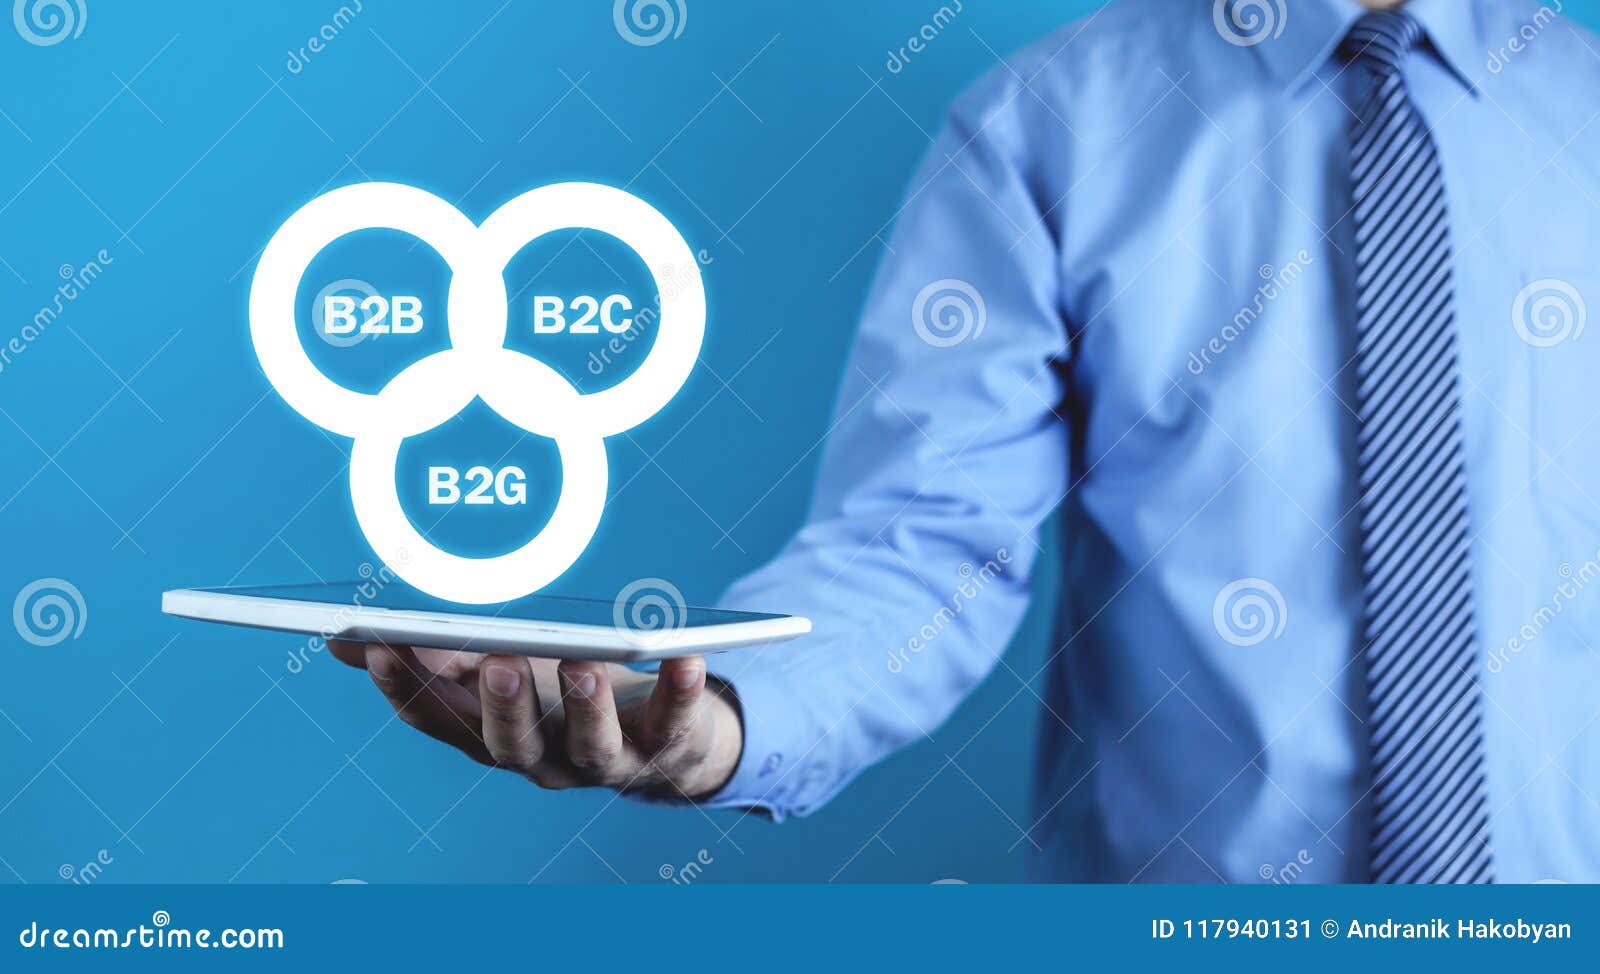 businessman holding b2b, b2c, b2g business models. business concept